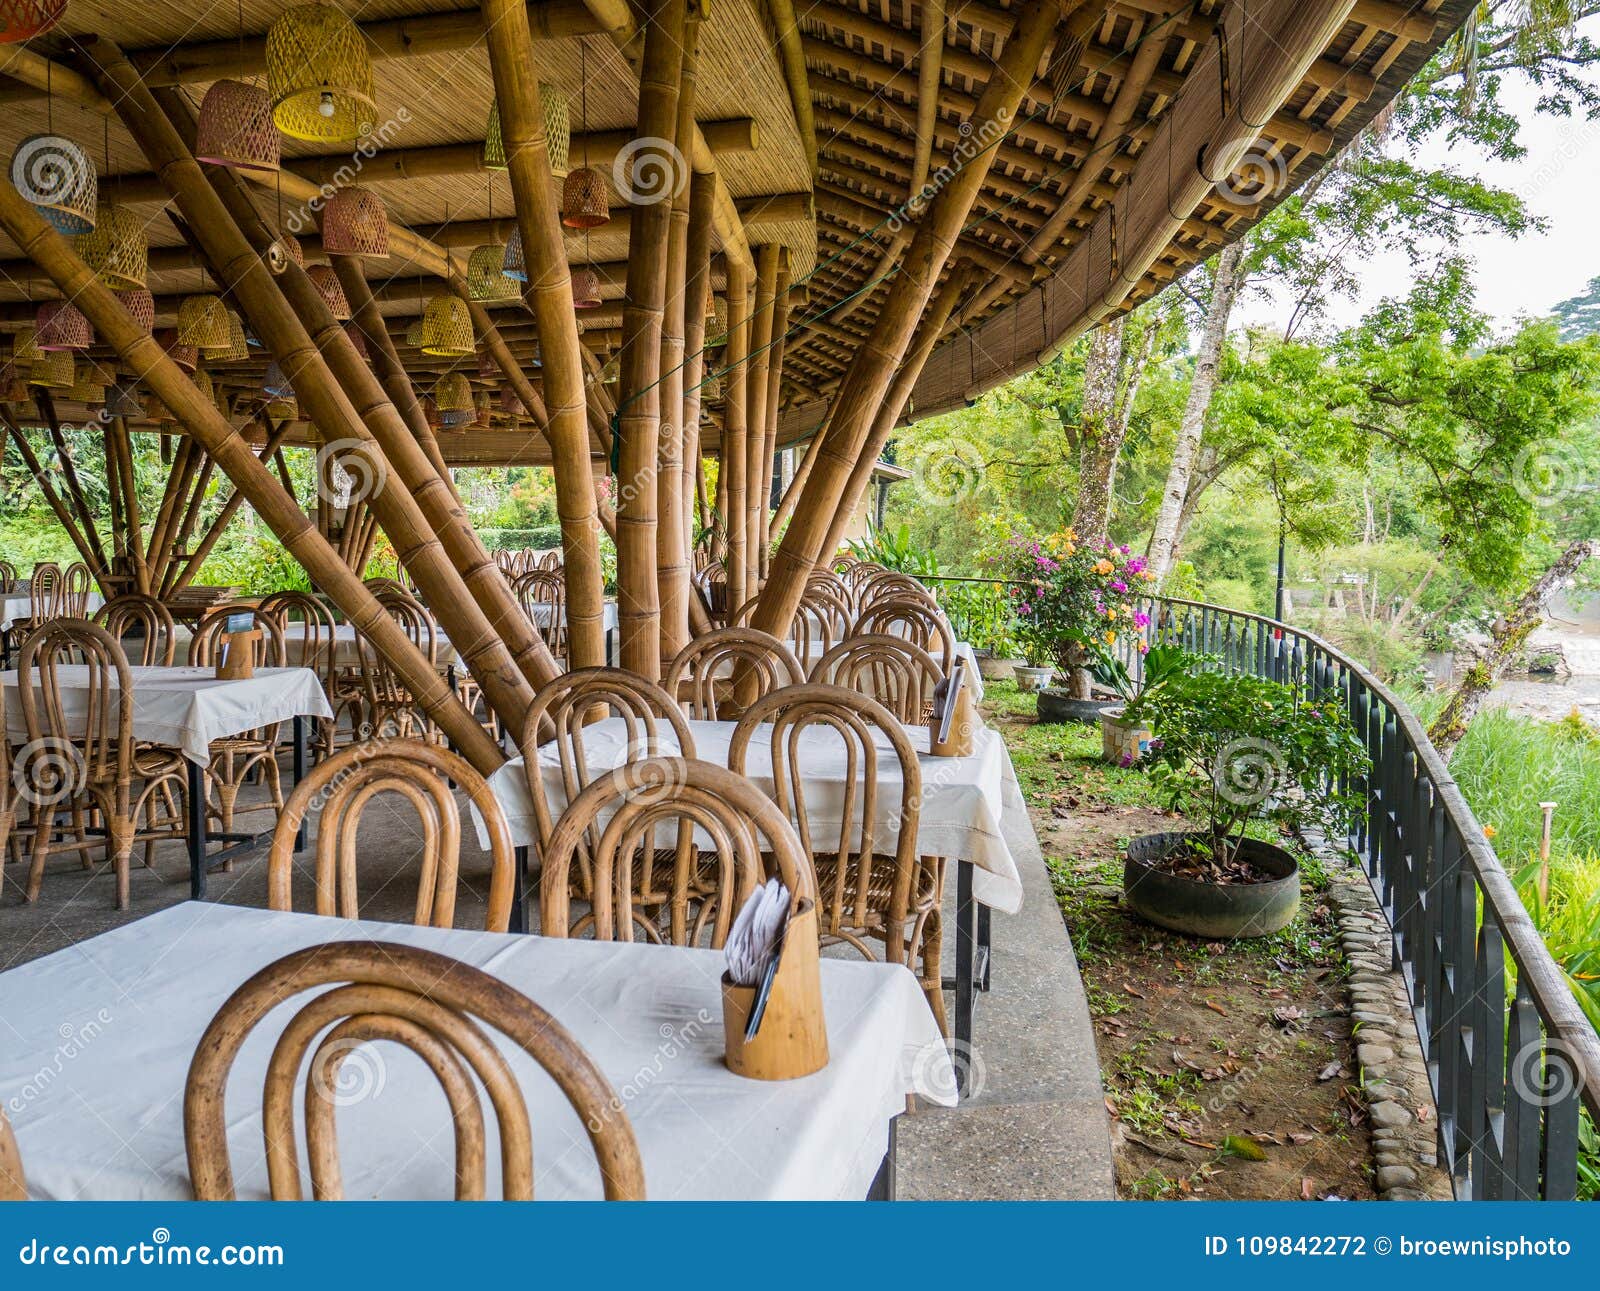 kapal bambu restaurant in ecolodge bukit lawang, indonesia